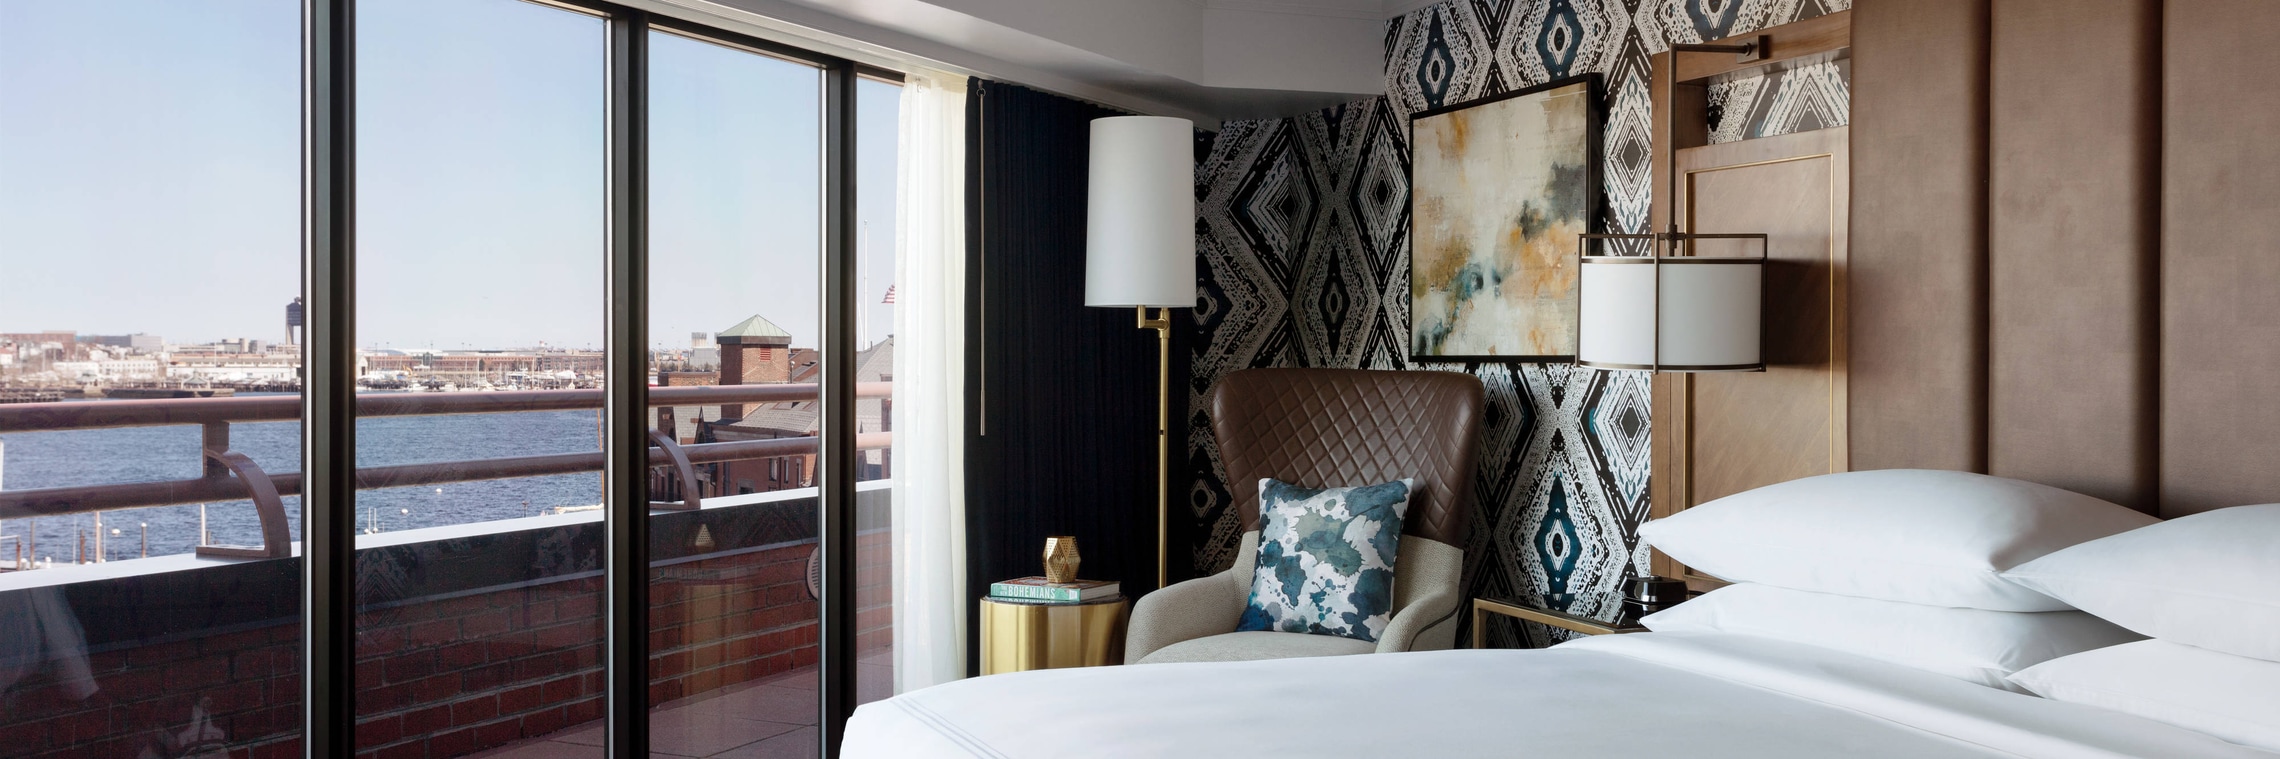 Luxury Waterfront Suite - Bedroom